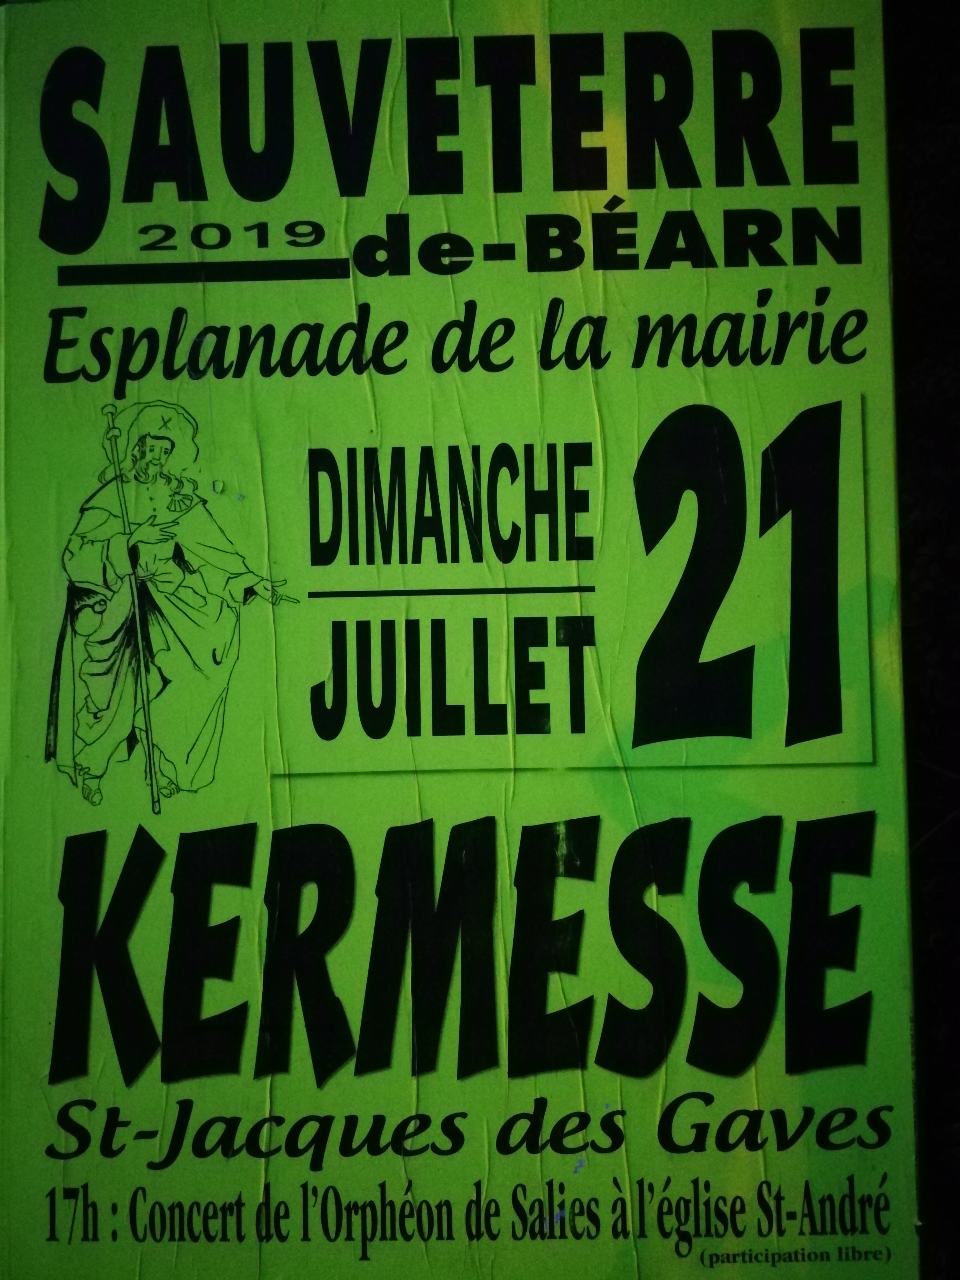 Kermesse Sauveterre dimanche 21 juillet